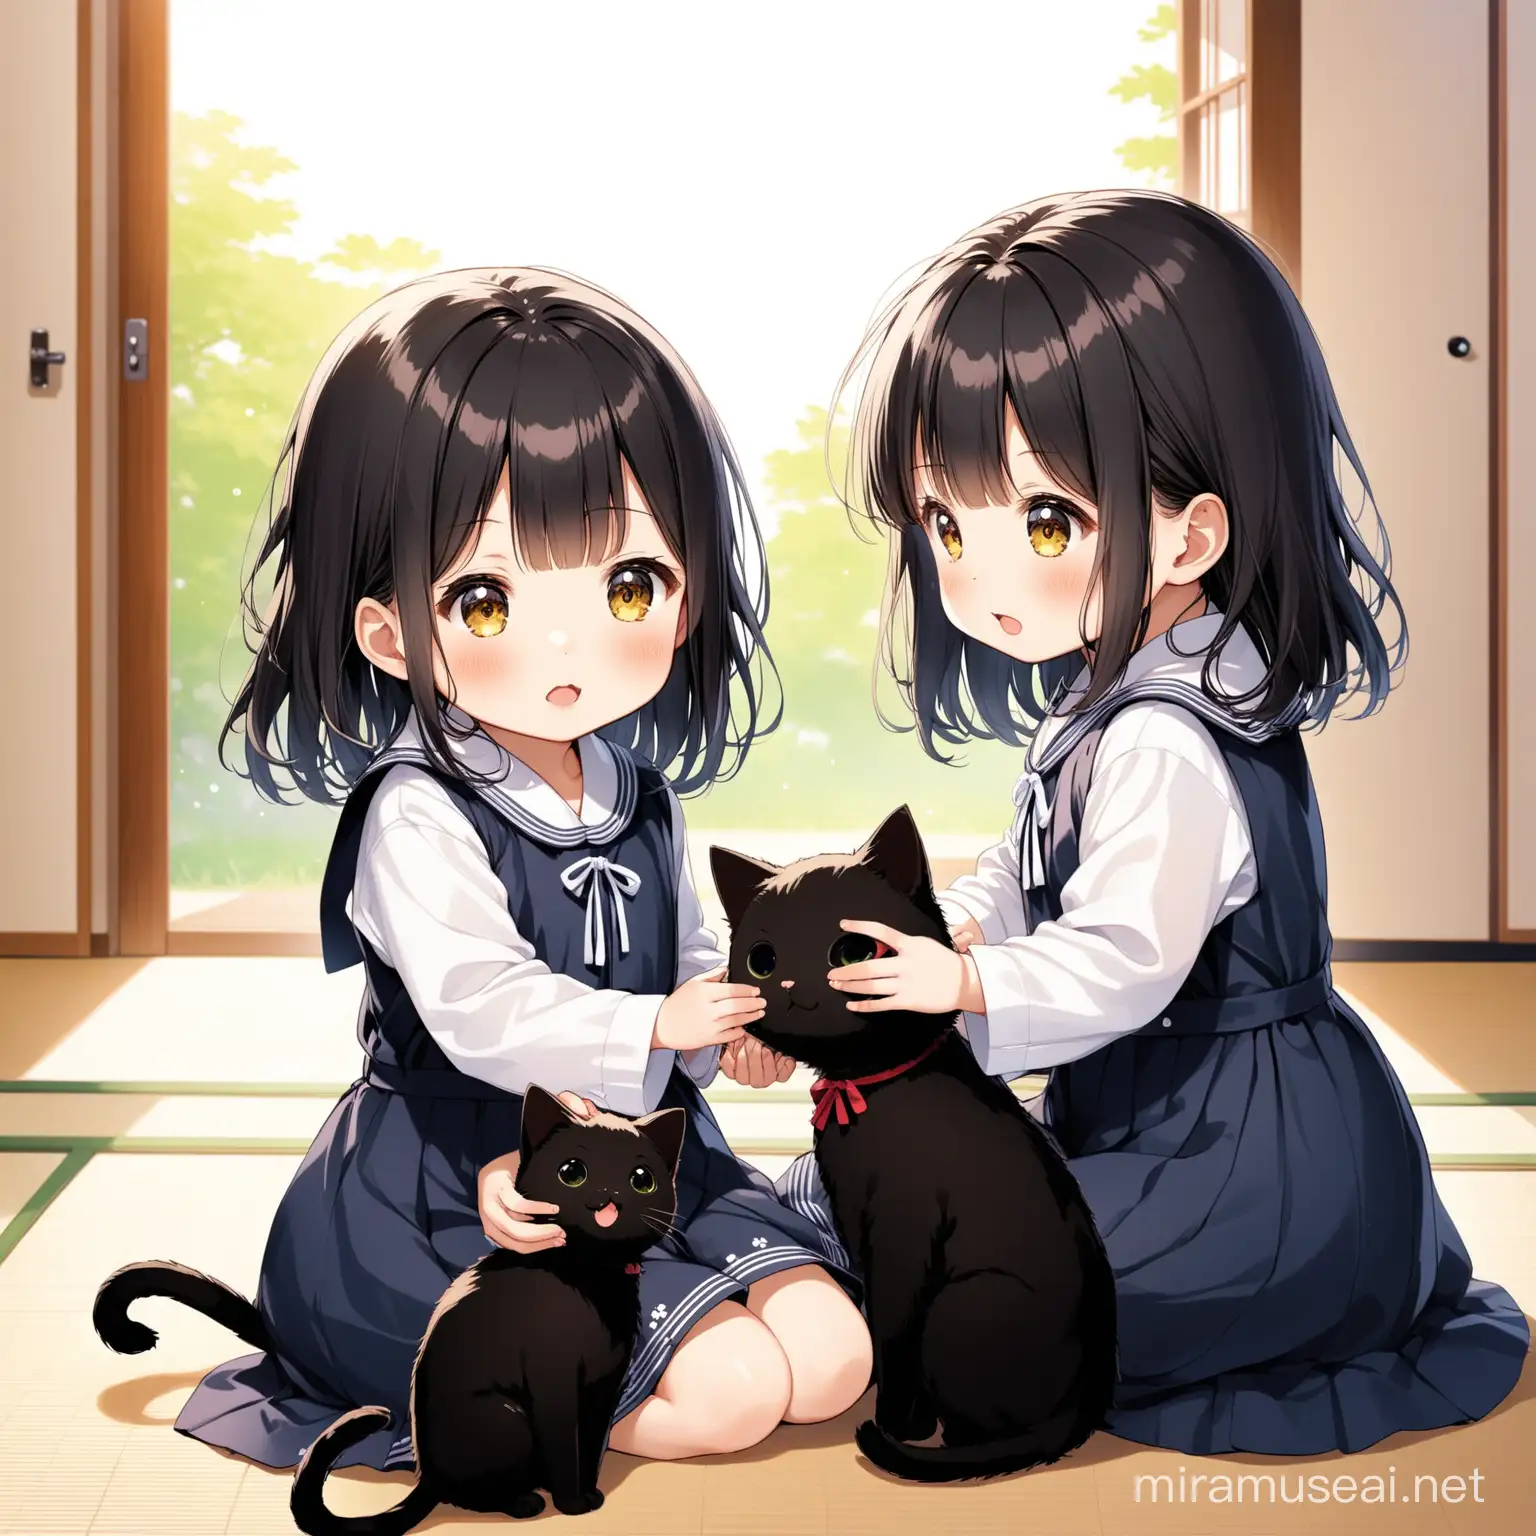 Twin Japanese kindergartner girls and their pet black cat